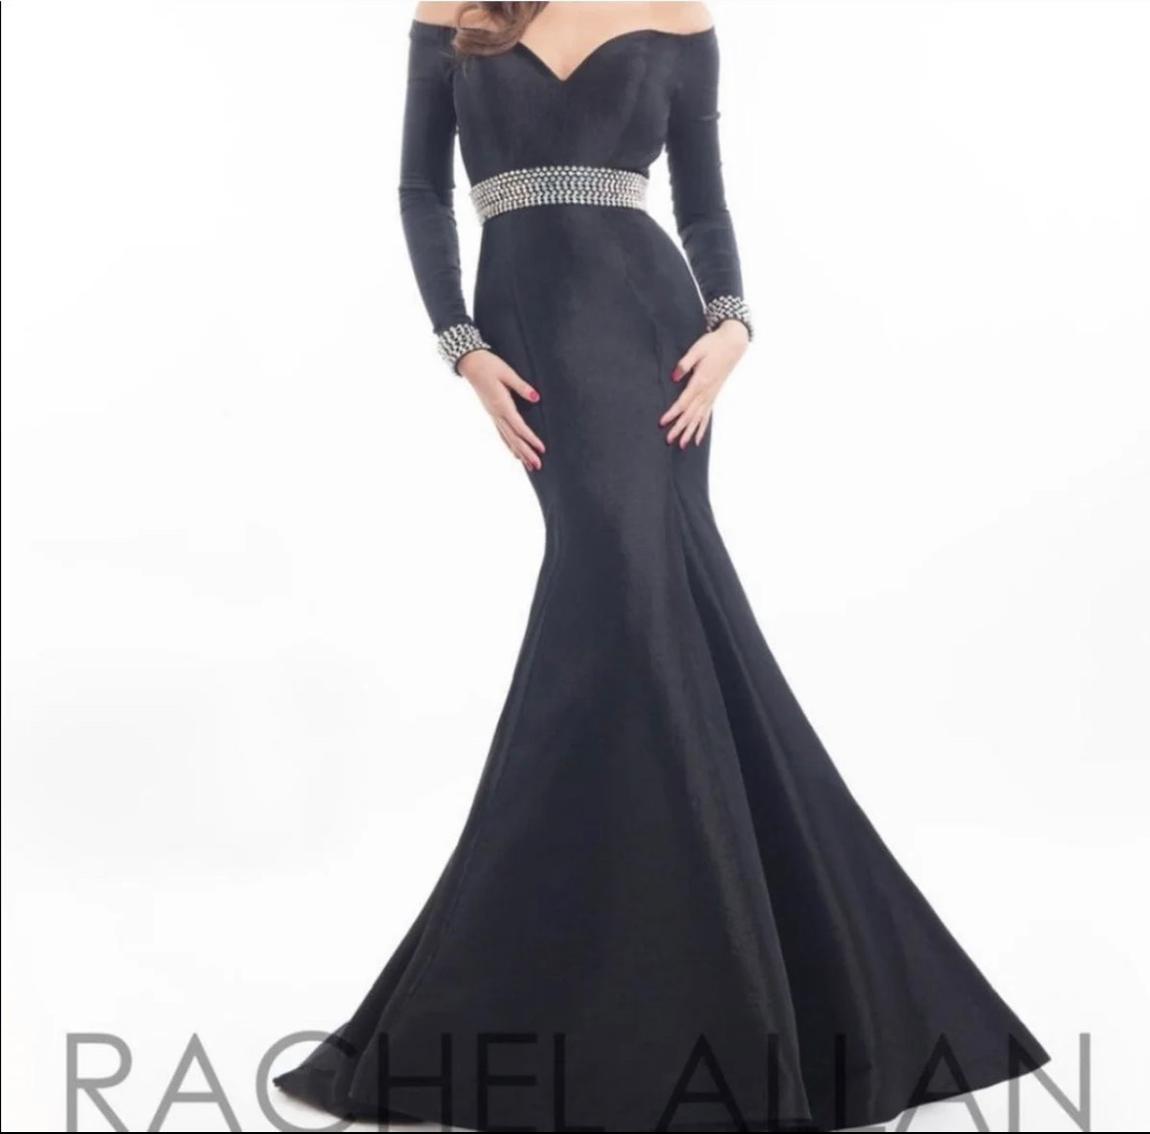 Rachel Allan Size 10 Prom Long Sleeve Sequined Black Mermaid Dress on Queenly